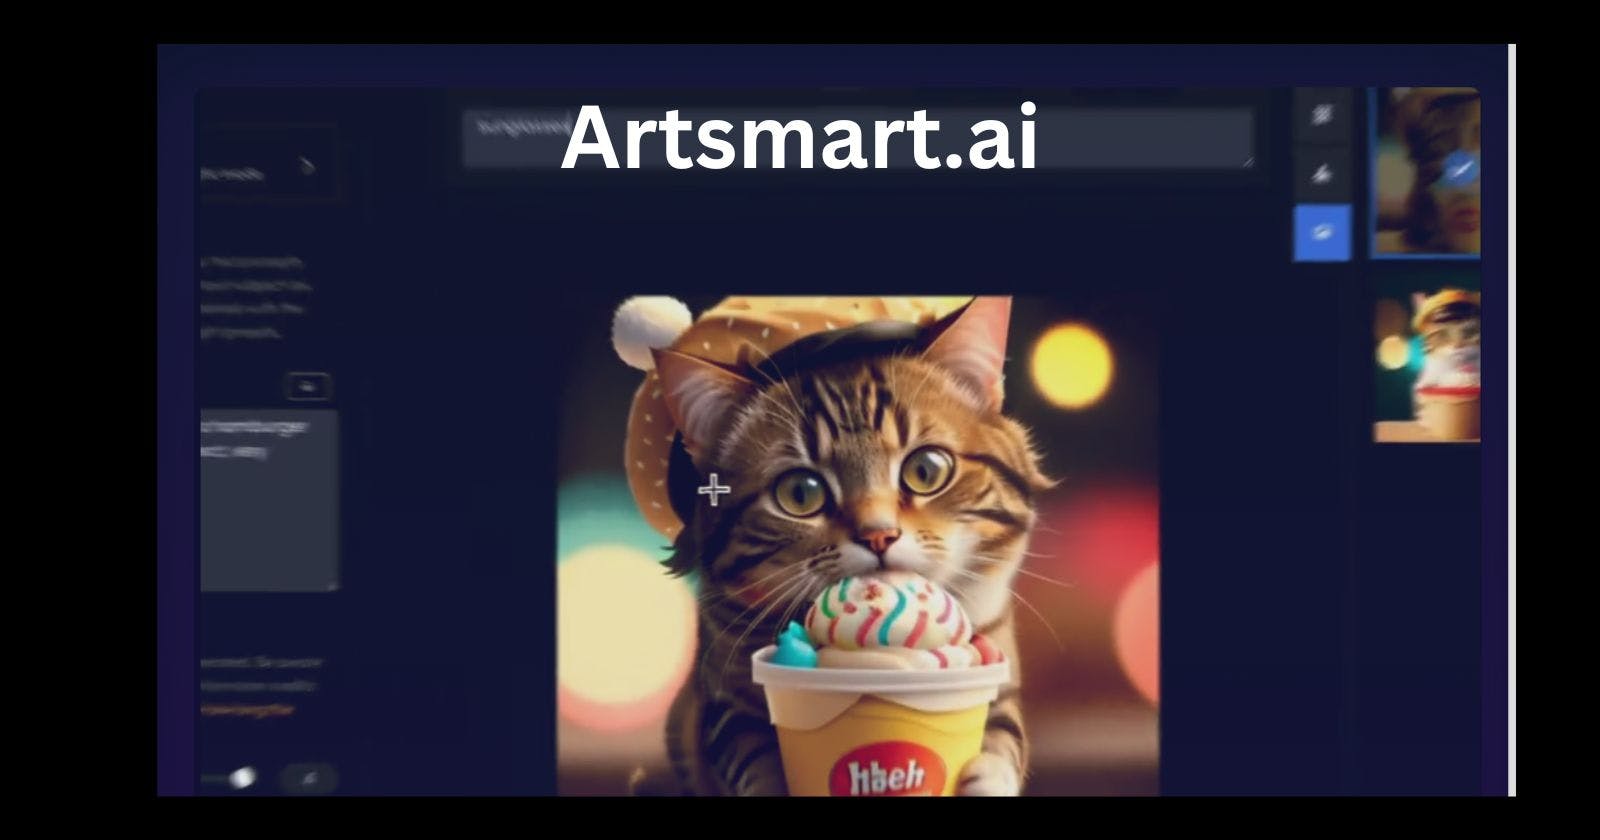 Artsmart.ai - An AI Art Generation Tool